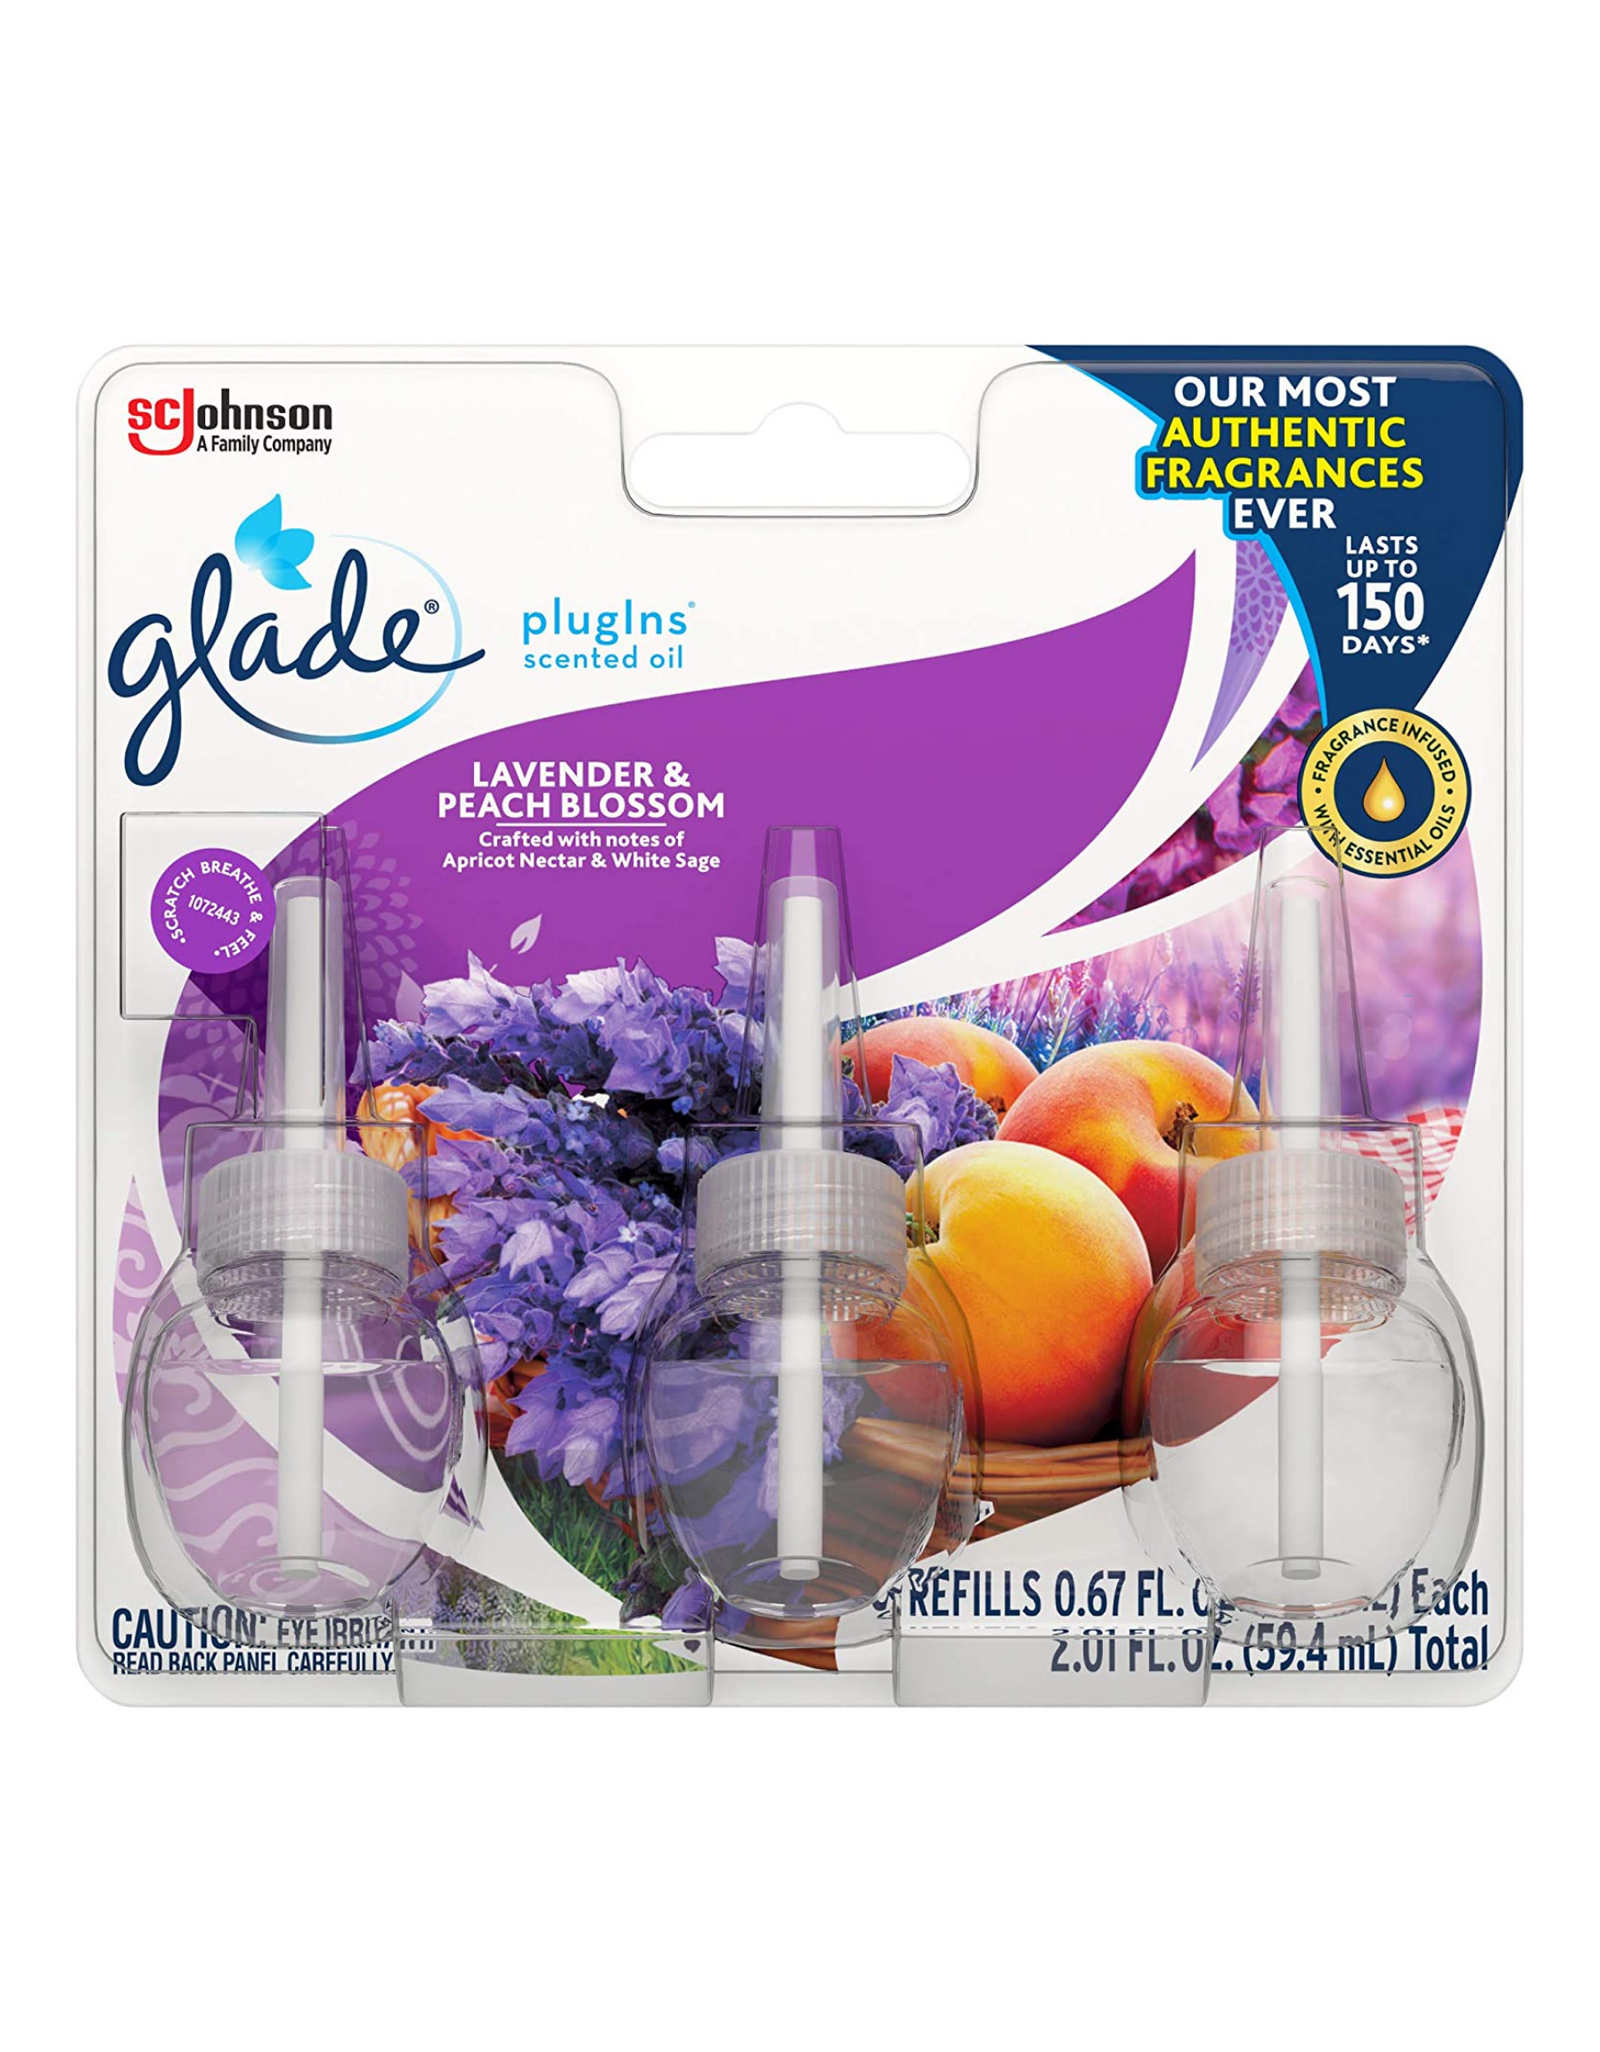 Glade PlugIns Refills Air Freshener, Scented Oil, Lavender & Peach